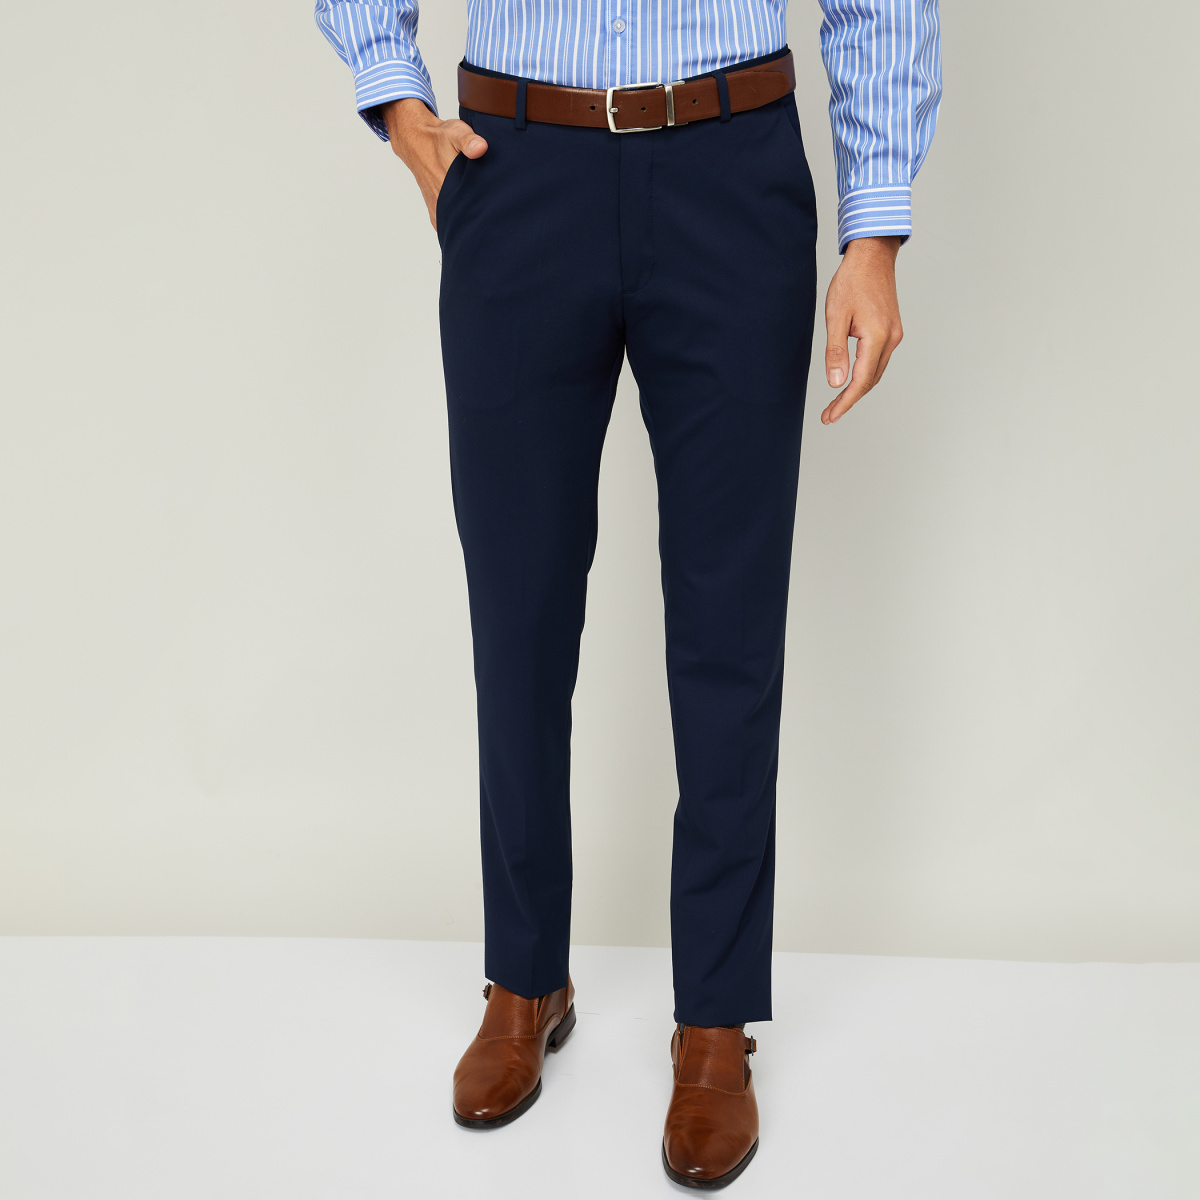 Dark Blue Formal Trouser for Men  Solid  Polywool Super Slim Fit   JadeBlue  JadeBlue Lifestyle